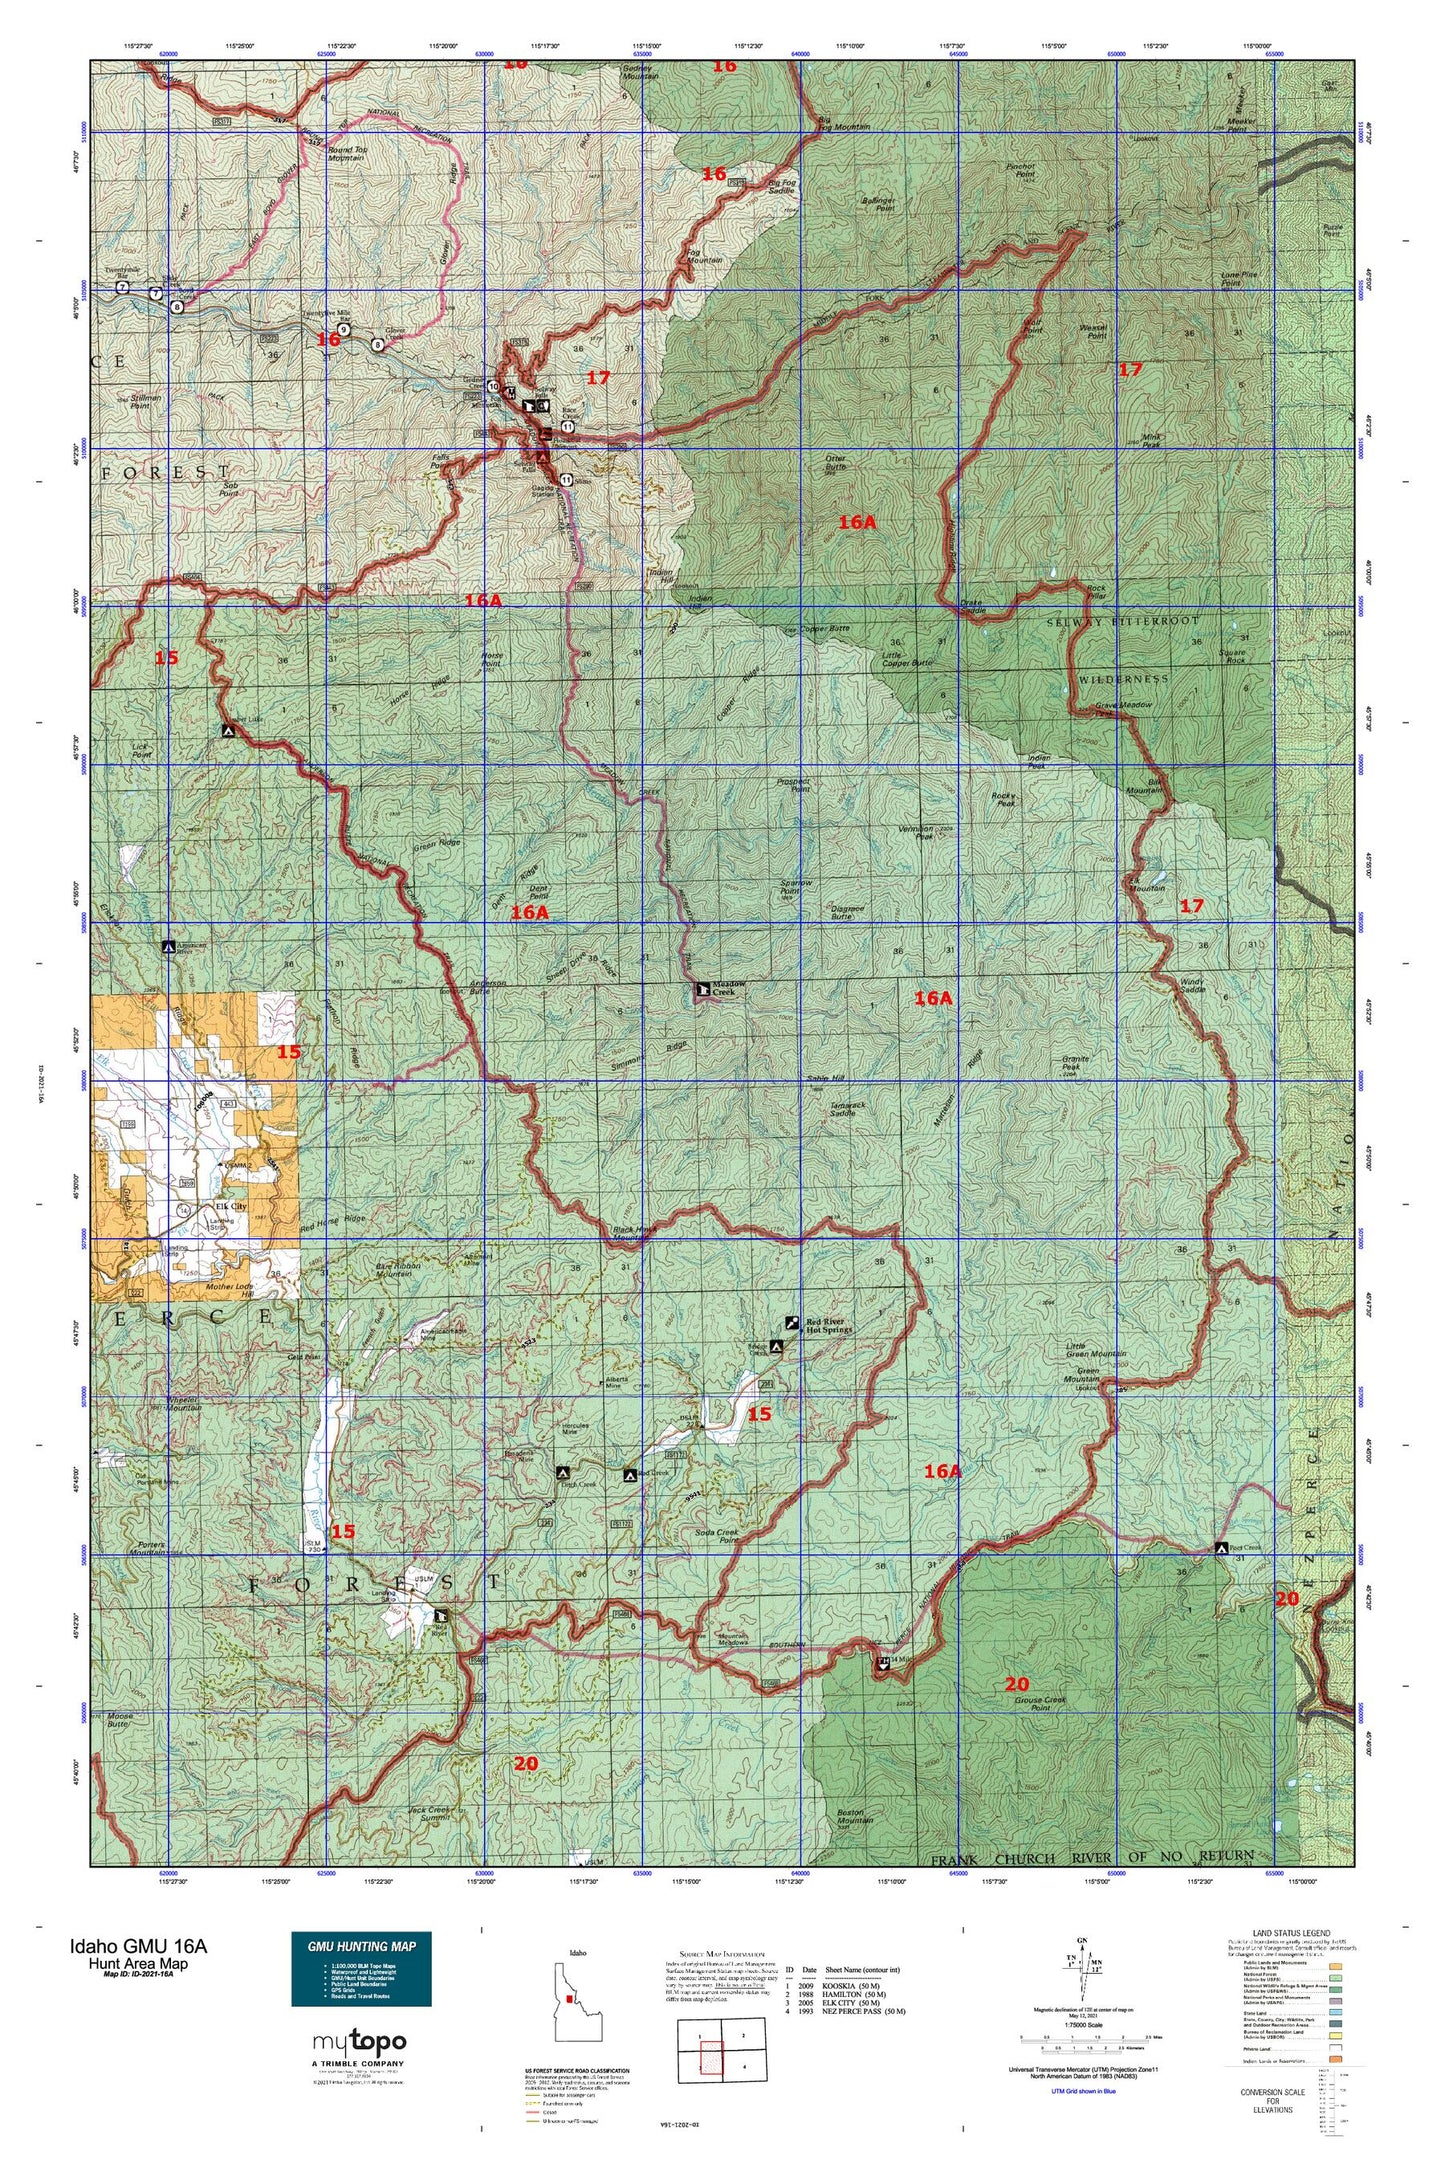 Idaho GMU 16A Map Image